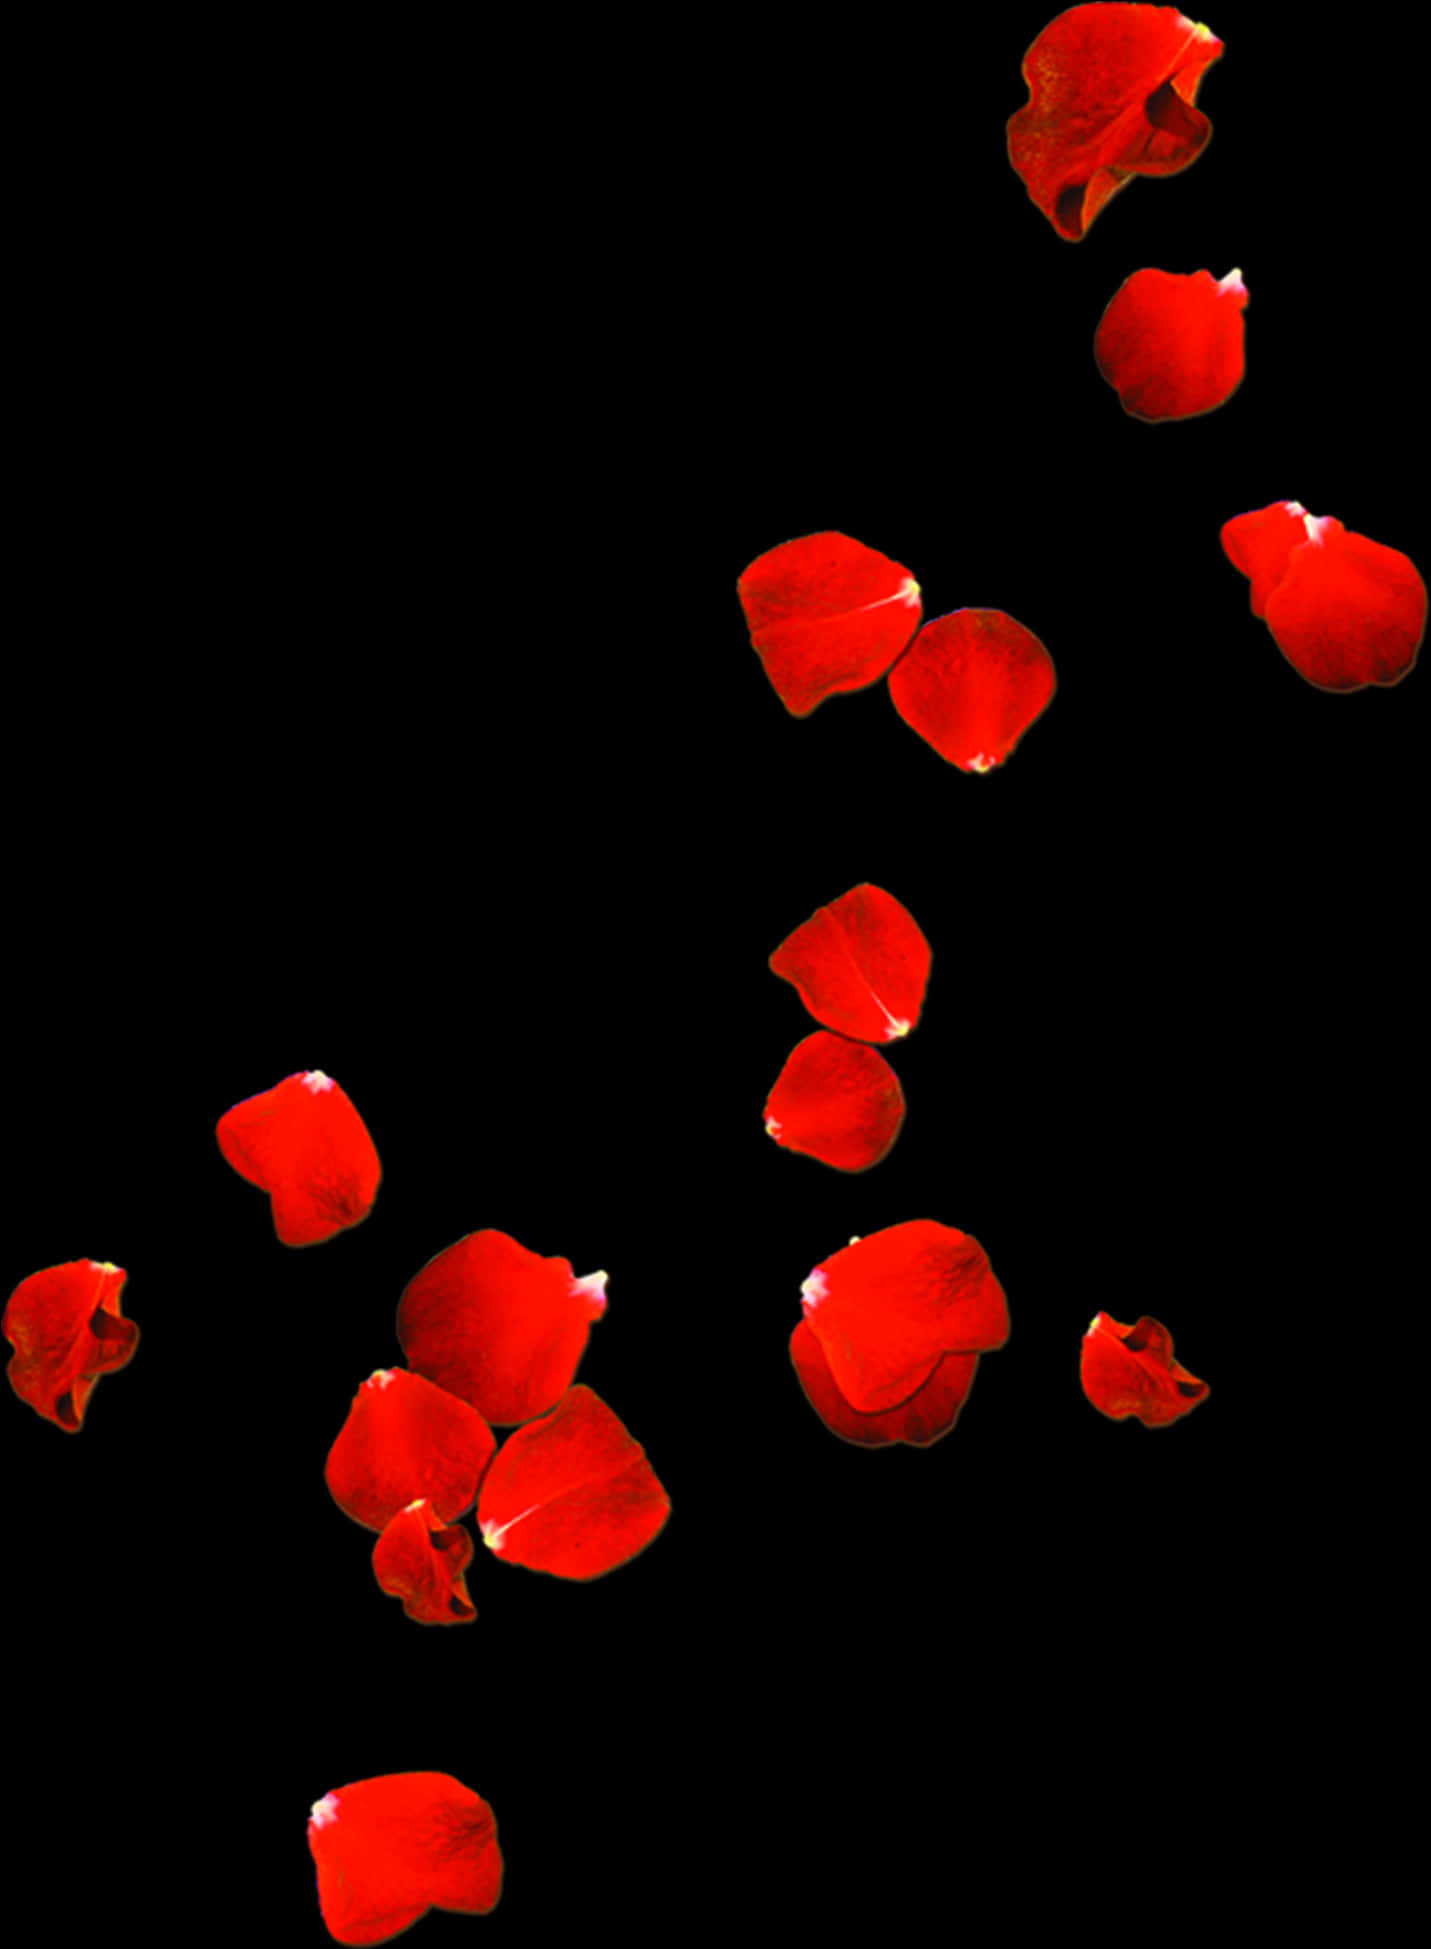 Red Rose Petals Falling Black Background